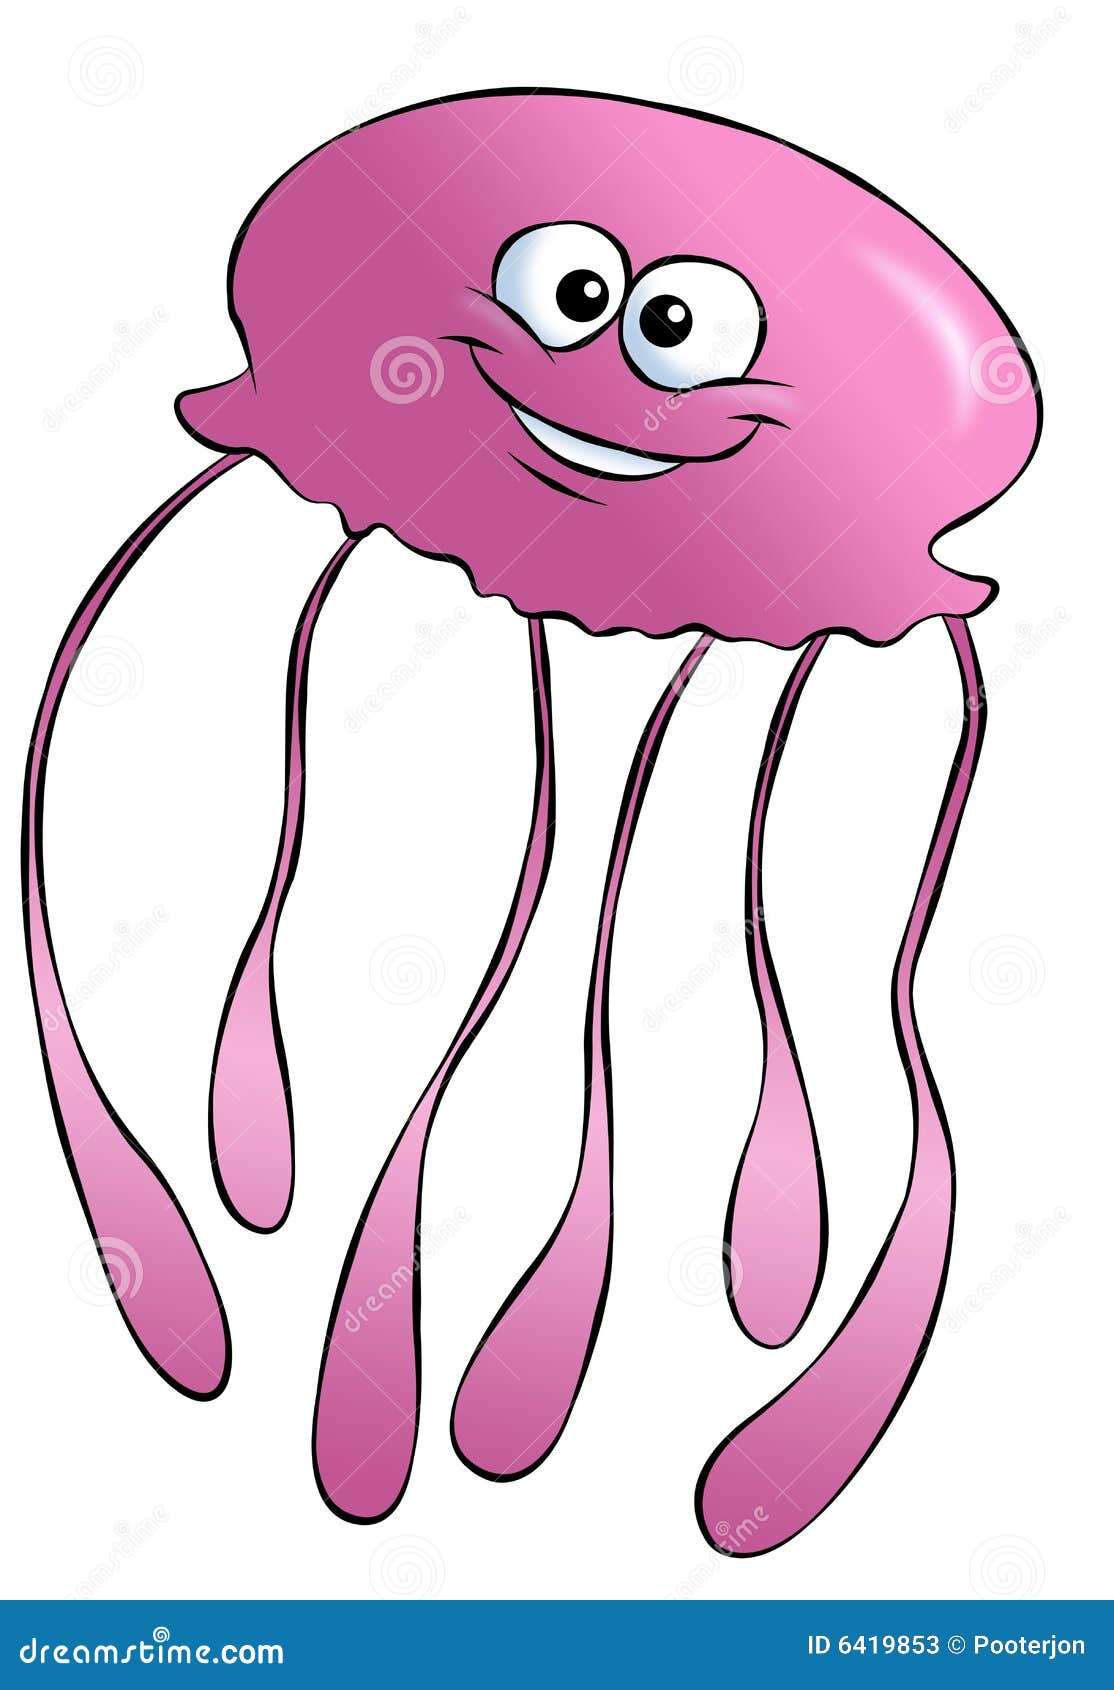 cartoon jellyfish clipart - photo #47